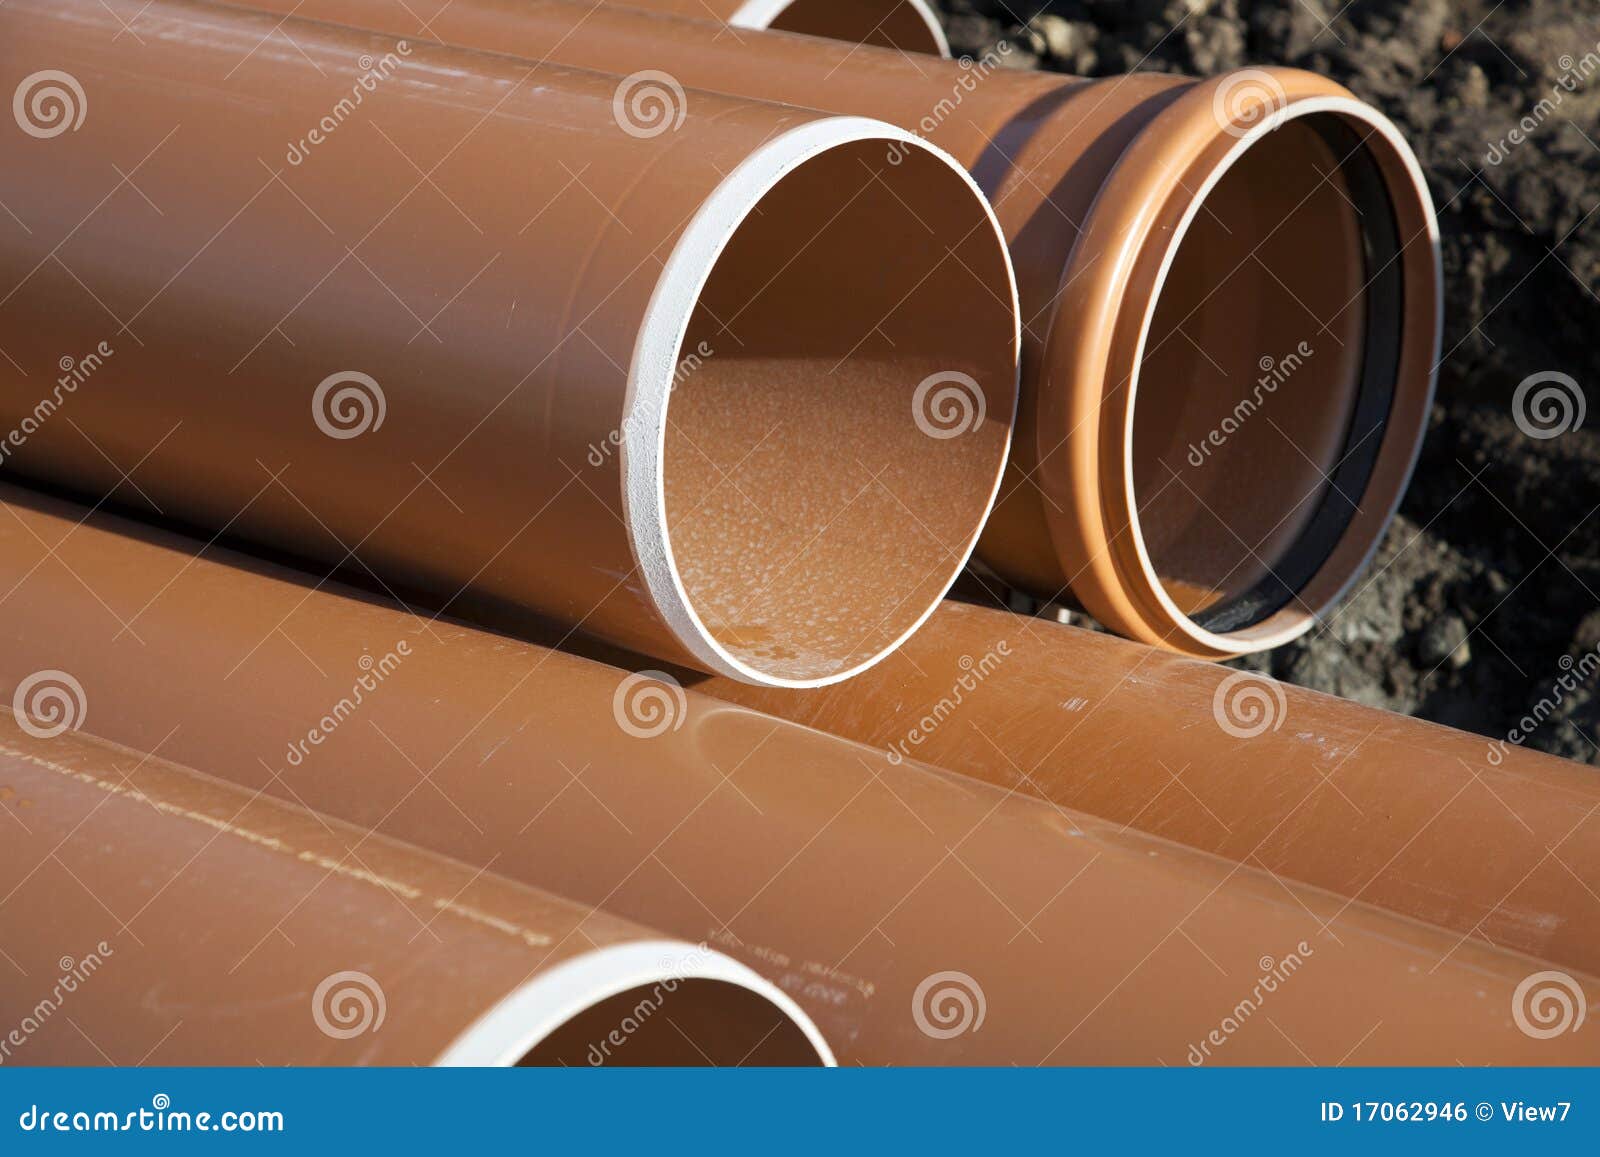 municipal water pipes or mains